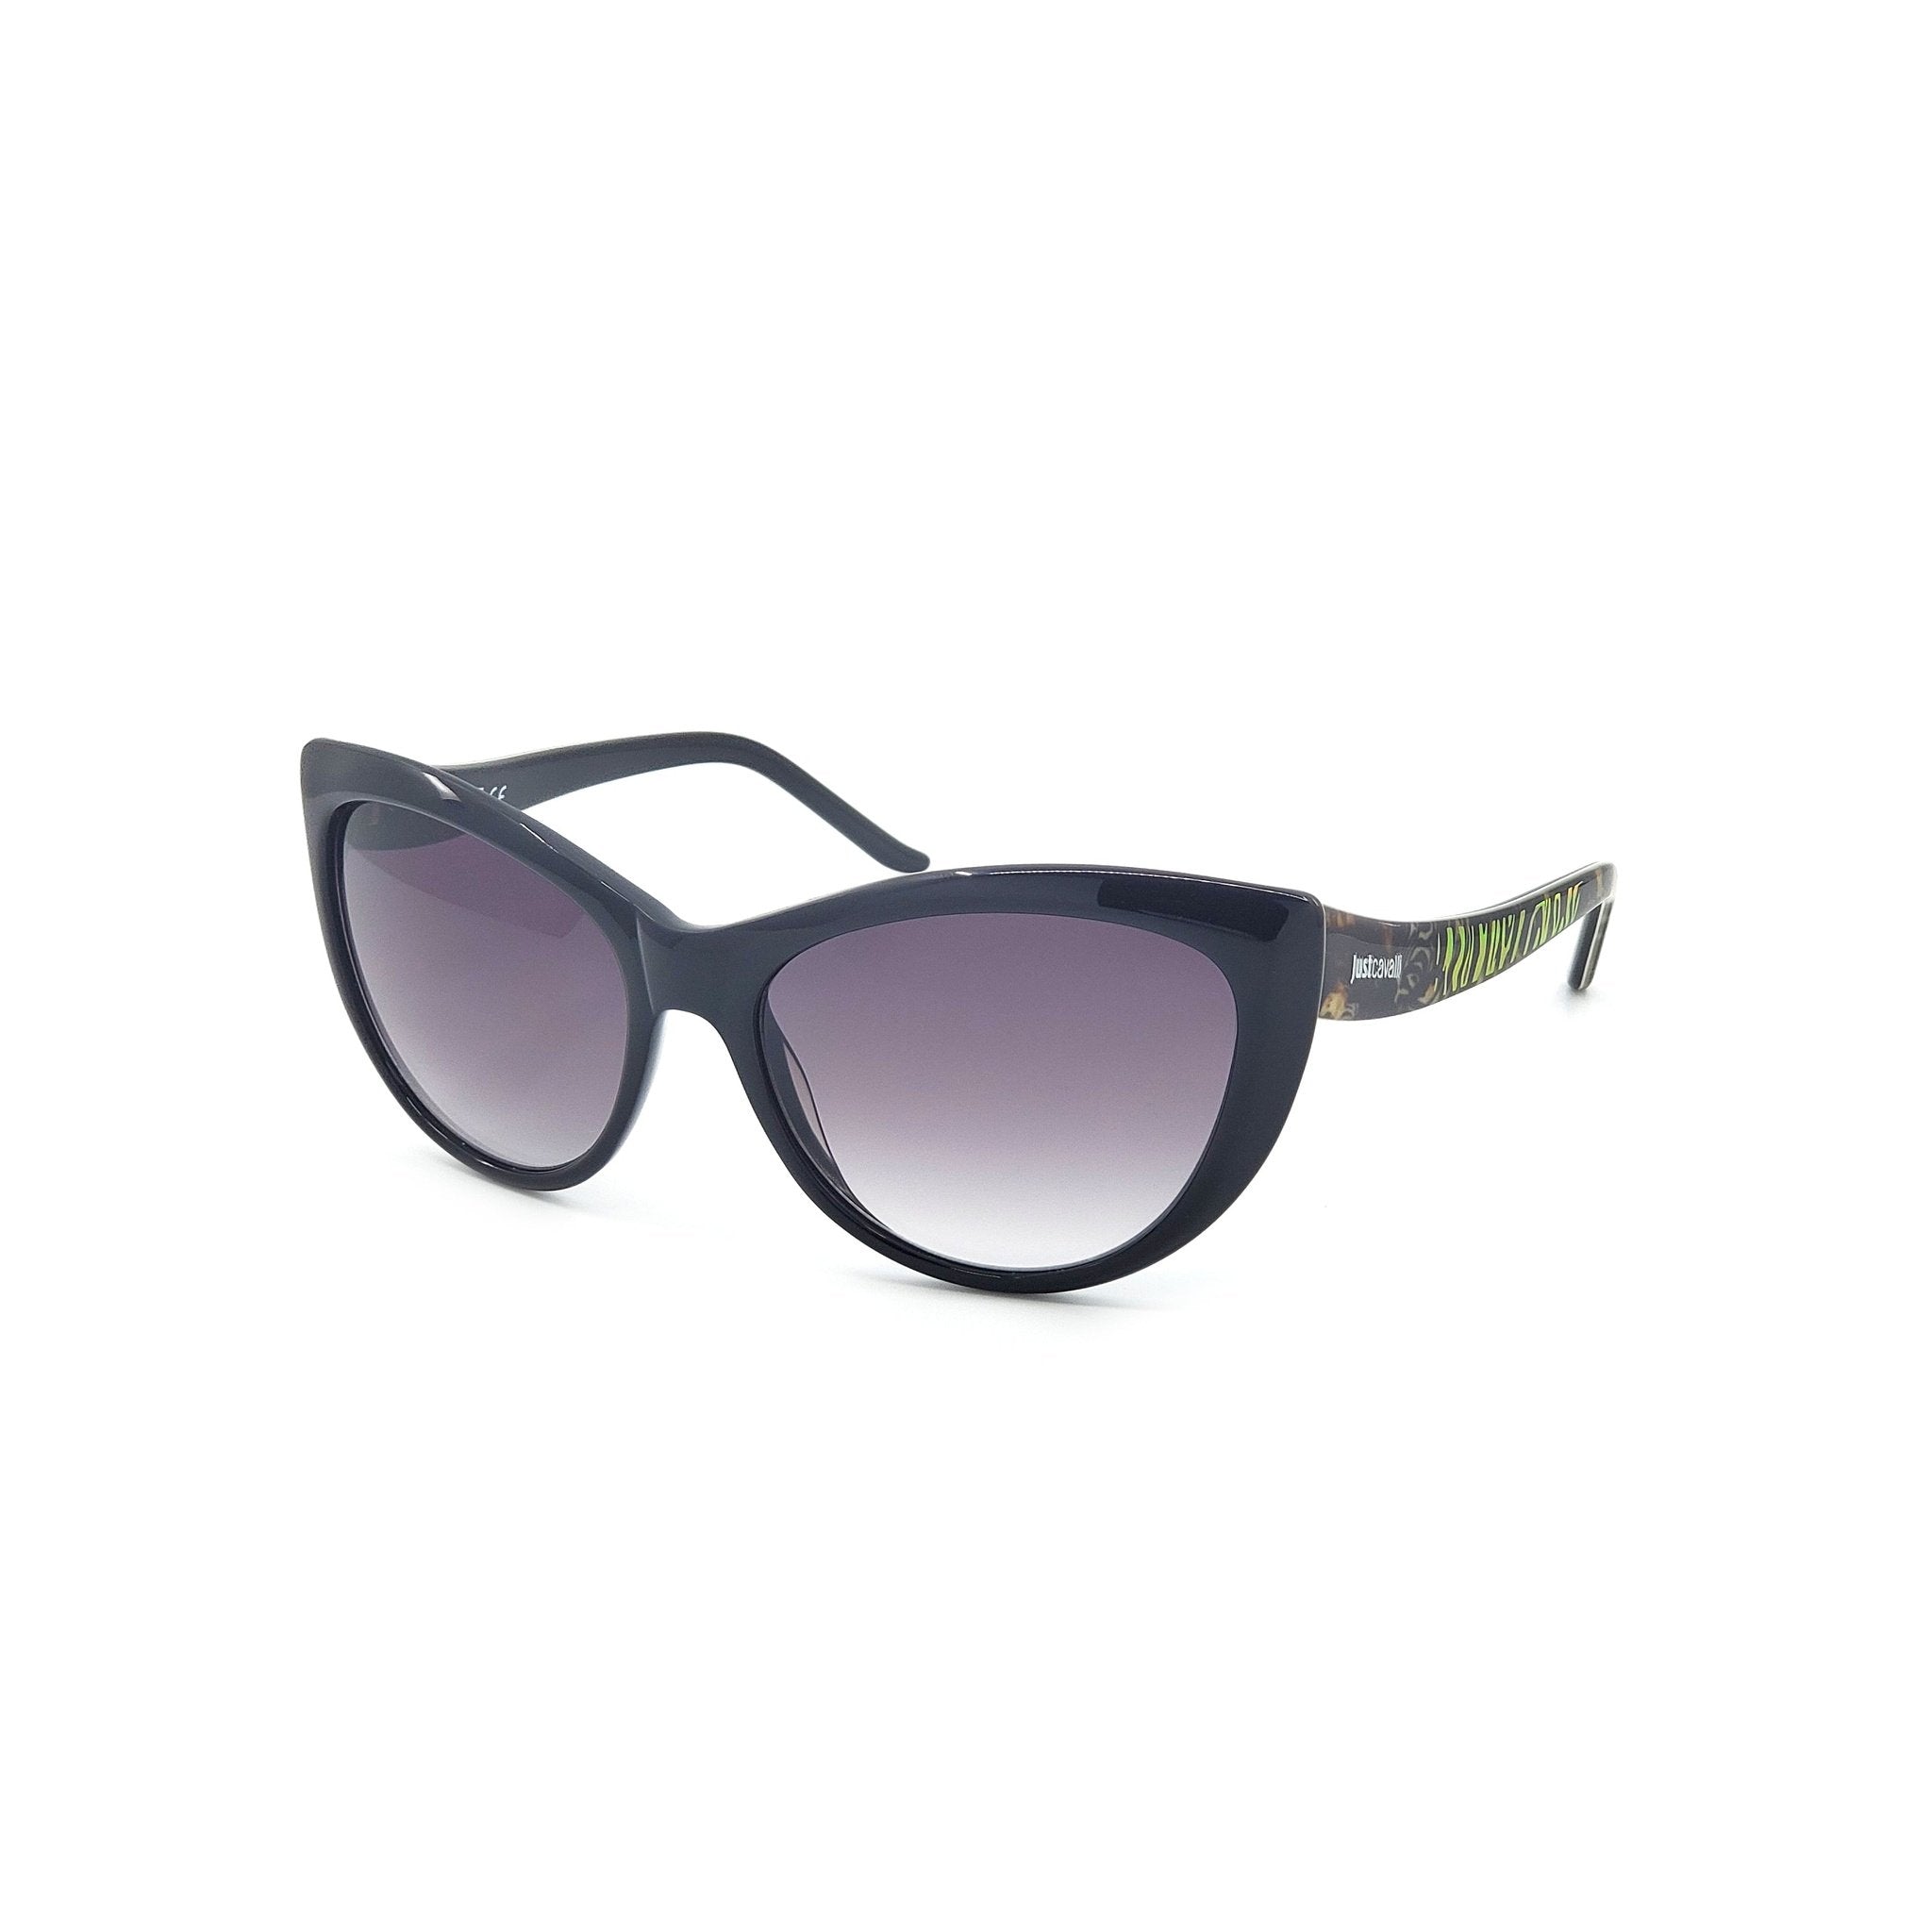 Just Cavalli Sunglasses - JC631S